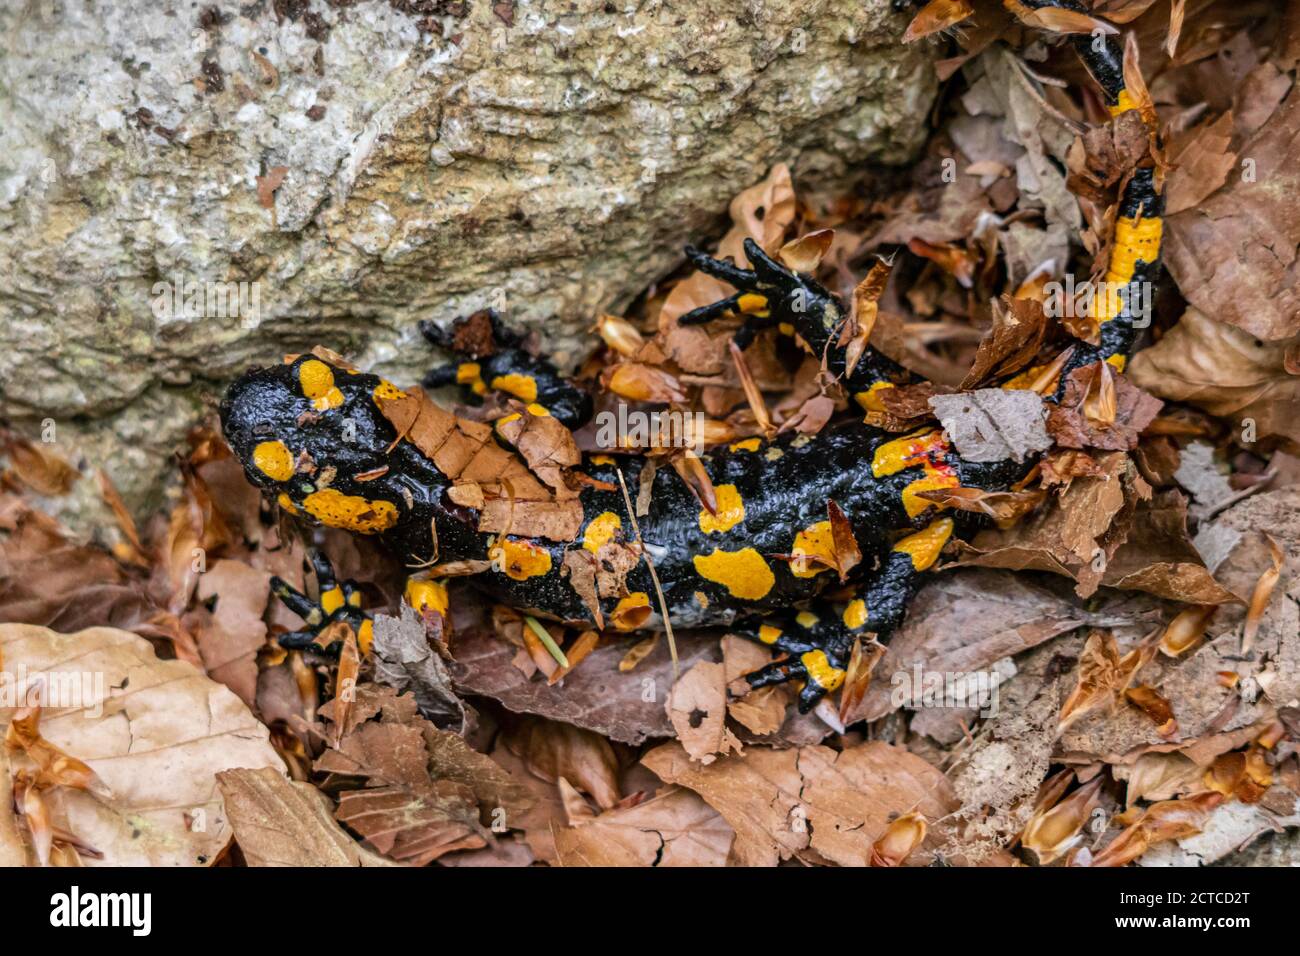 Fire salamander crawling through leaves Stock Photo